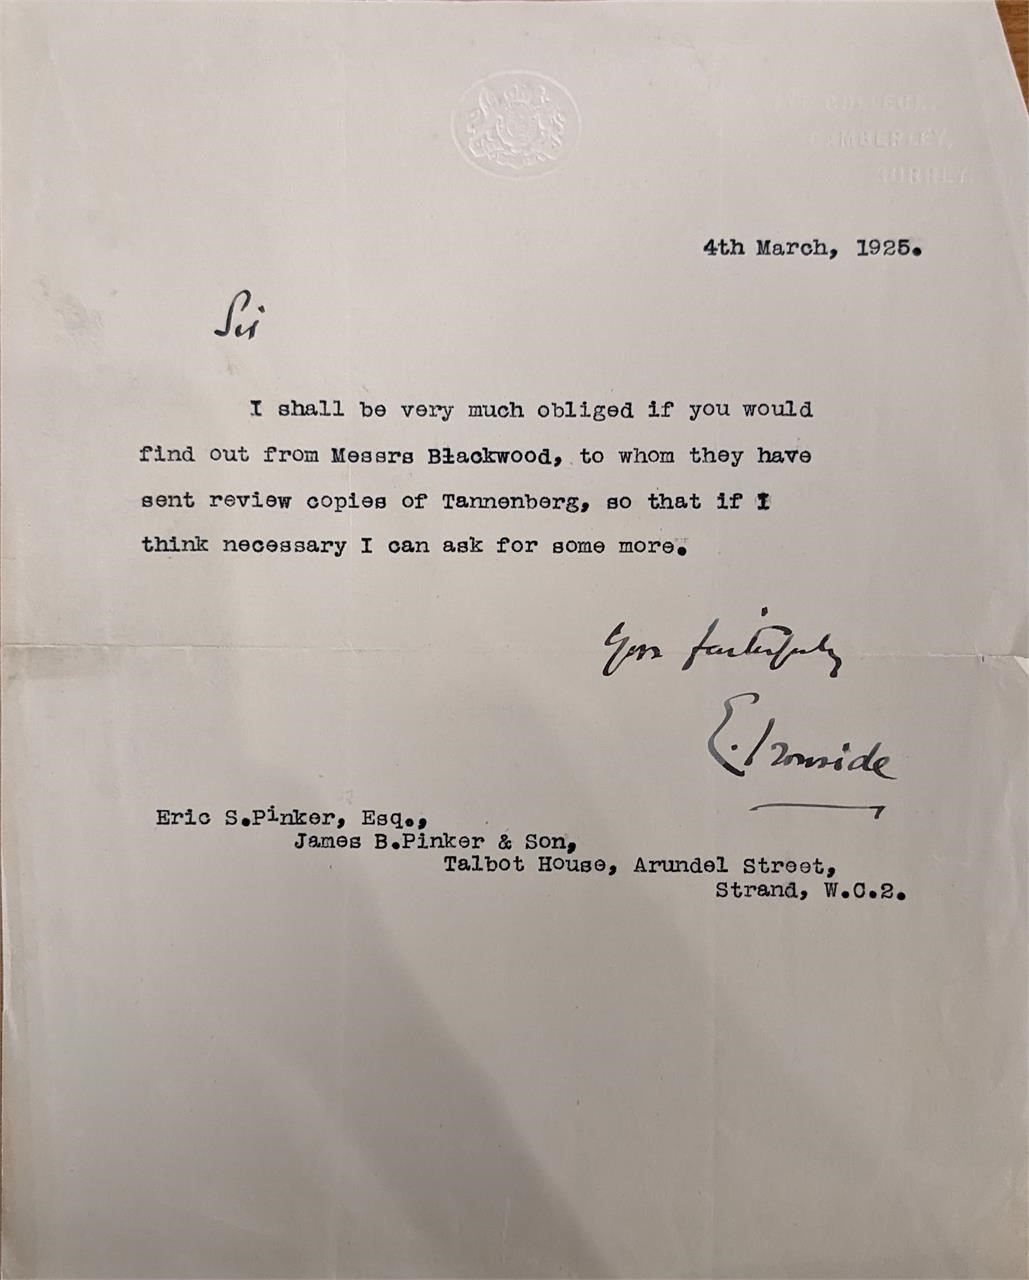 WW1 British Field Marshal Ironside Signed Note